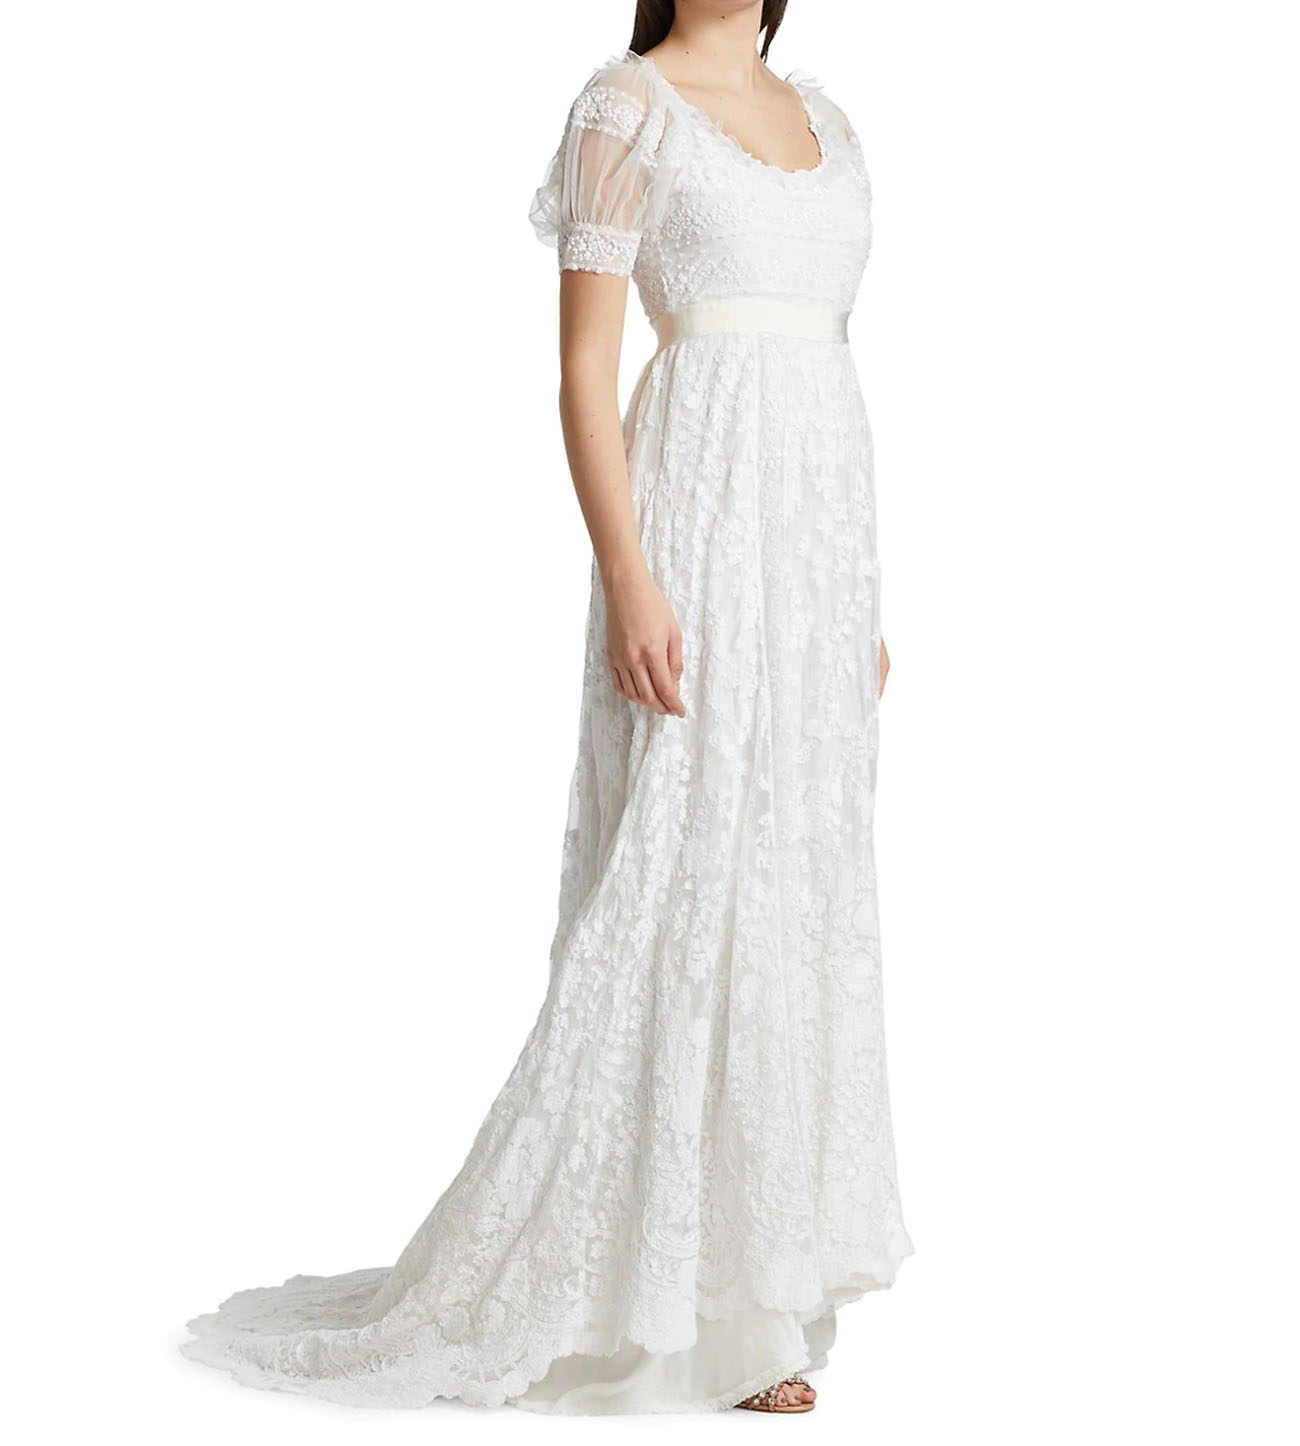 bridgerton-inspired wedding-dress white lace gown loveshackfancy